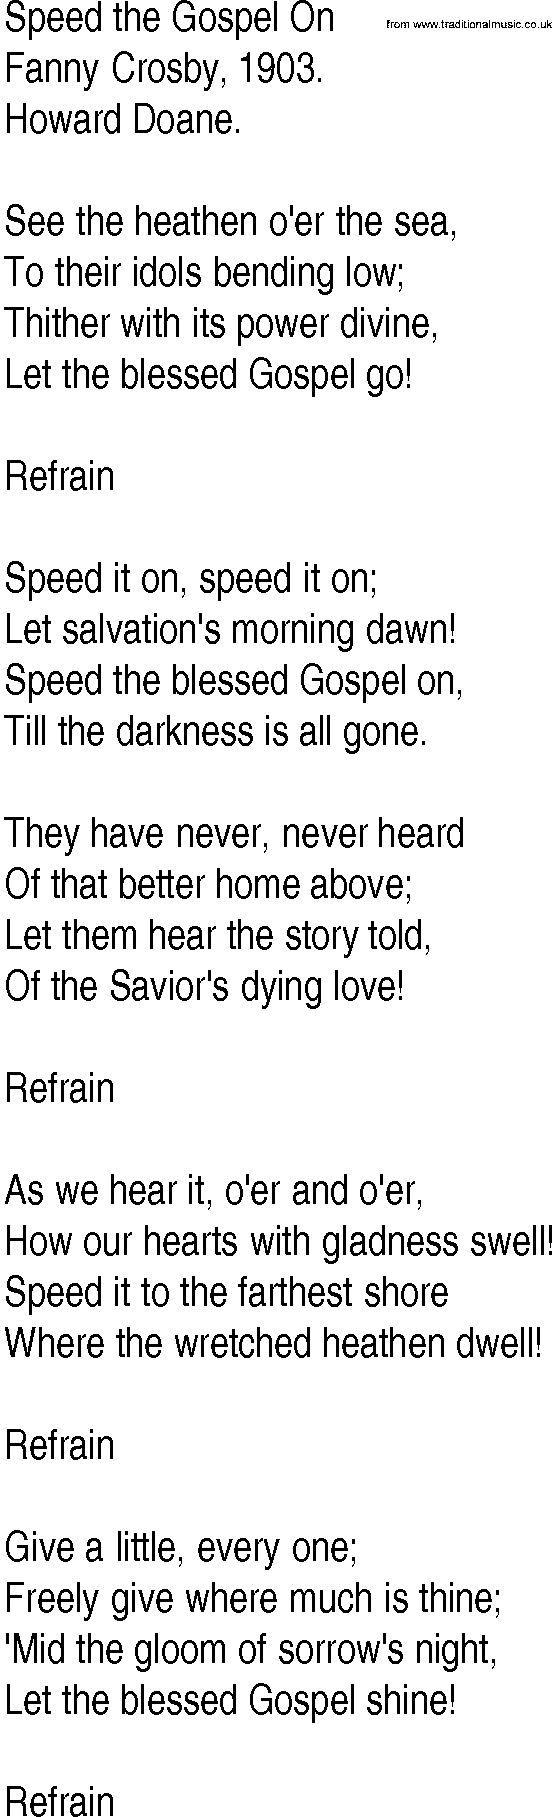 Hymn and Gospel Song: Speed the Gospel On by Fanny Crosby lyrics